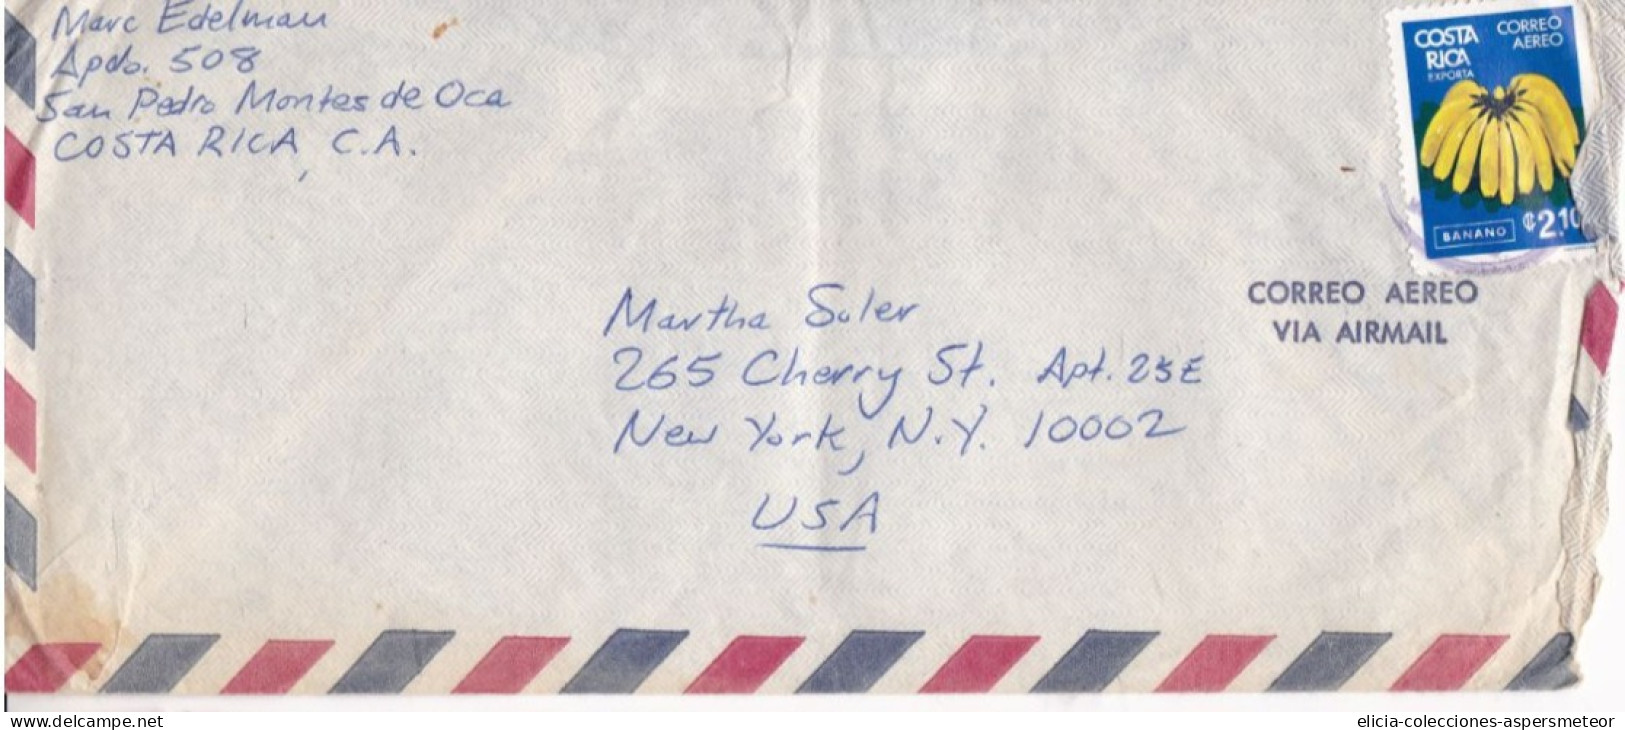 Costa Rica - Airmail - Letter - Sent From San Pedro Montes De Oca To NY, USA - Caja 30 - Costa Rica